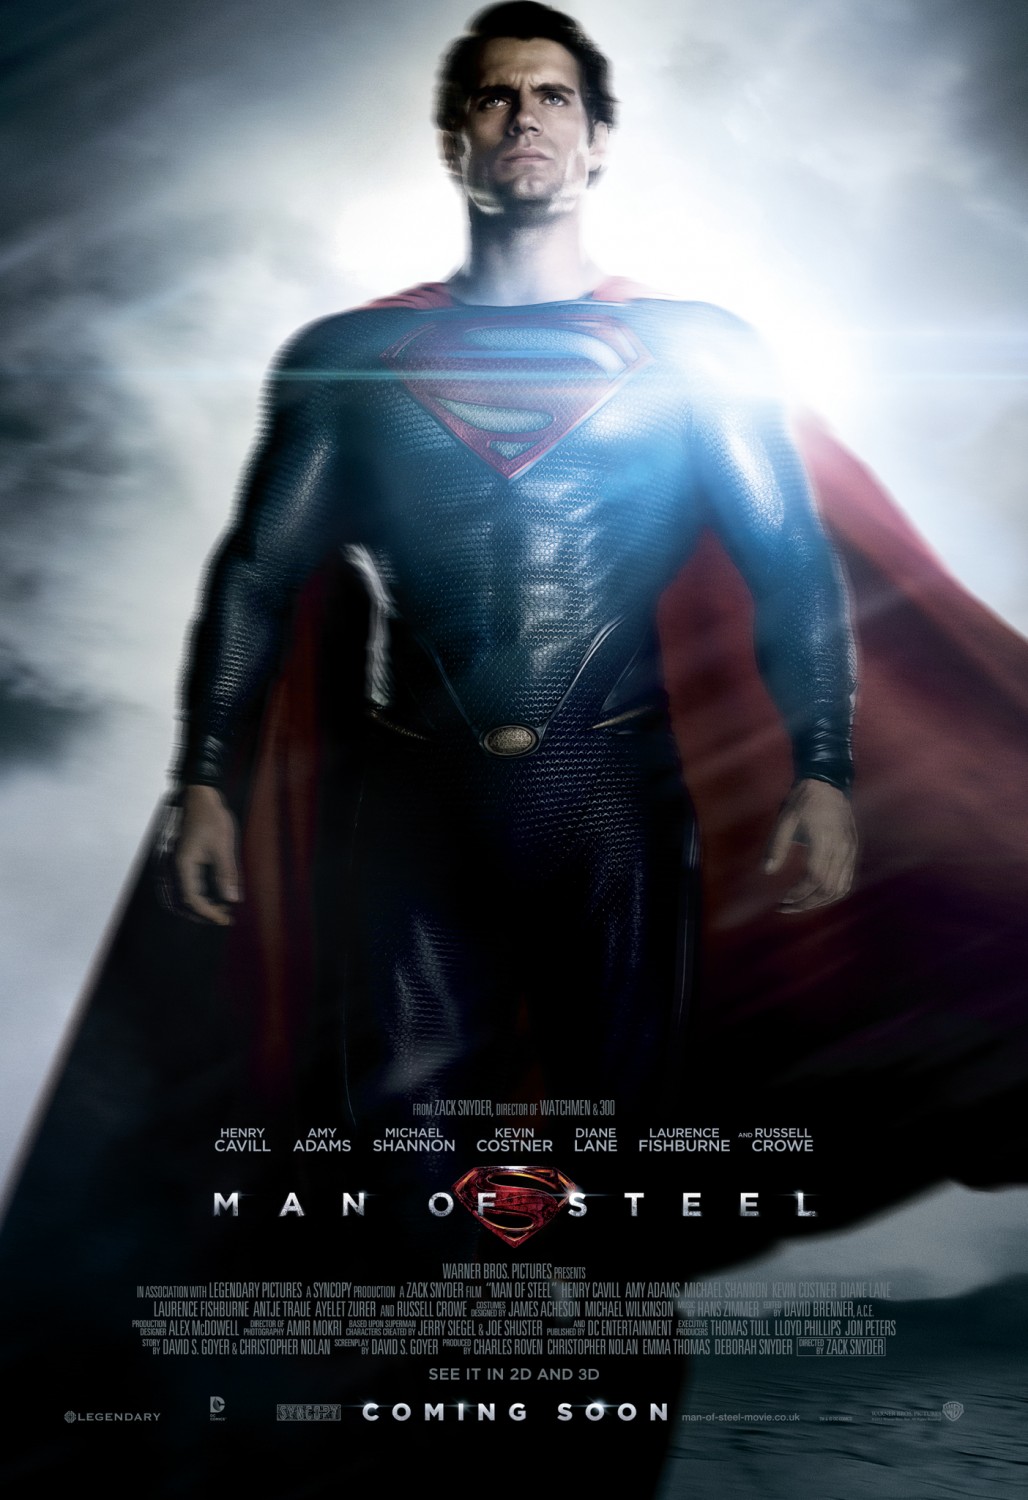 Henry Cavill & Zack Snyder Discuss Superman Audition